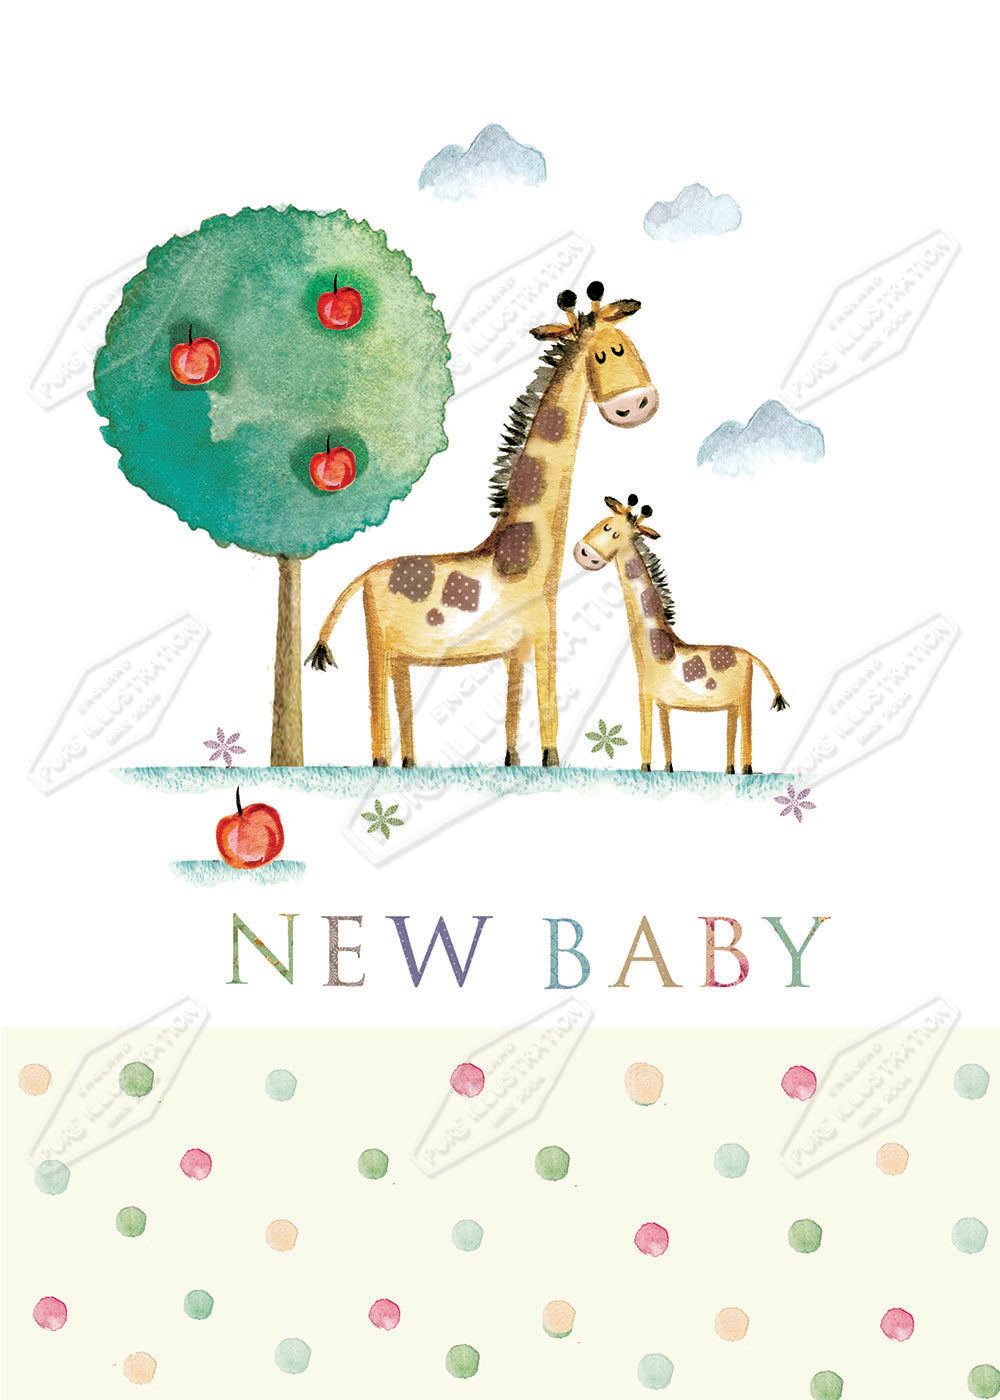 00029449DEV - Deva Evans is represented by Pure Art Licensing Agency - New Baby Greeting Card Design